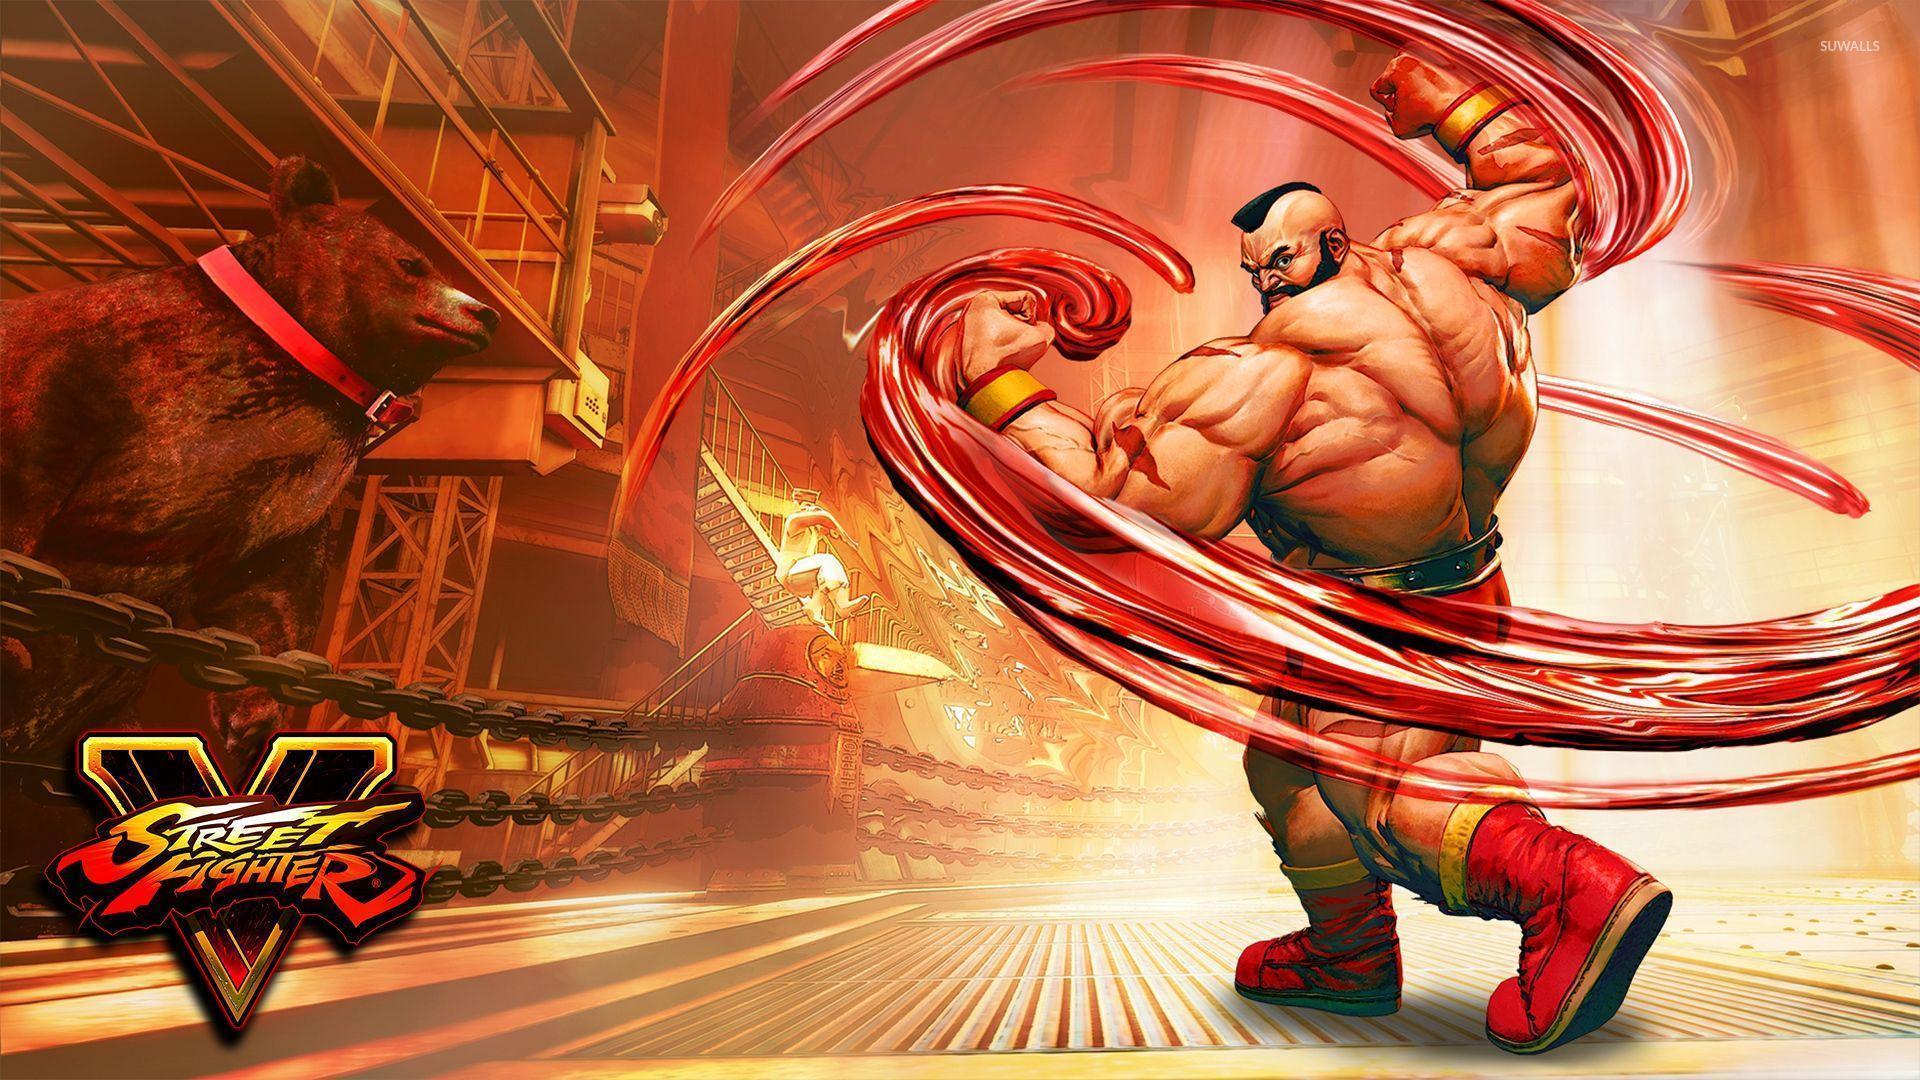 Street Fighter wallpaper